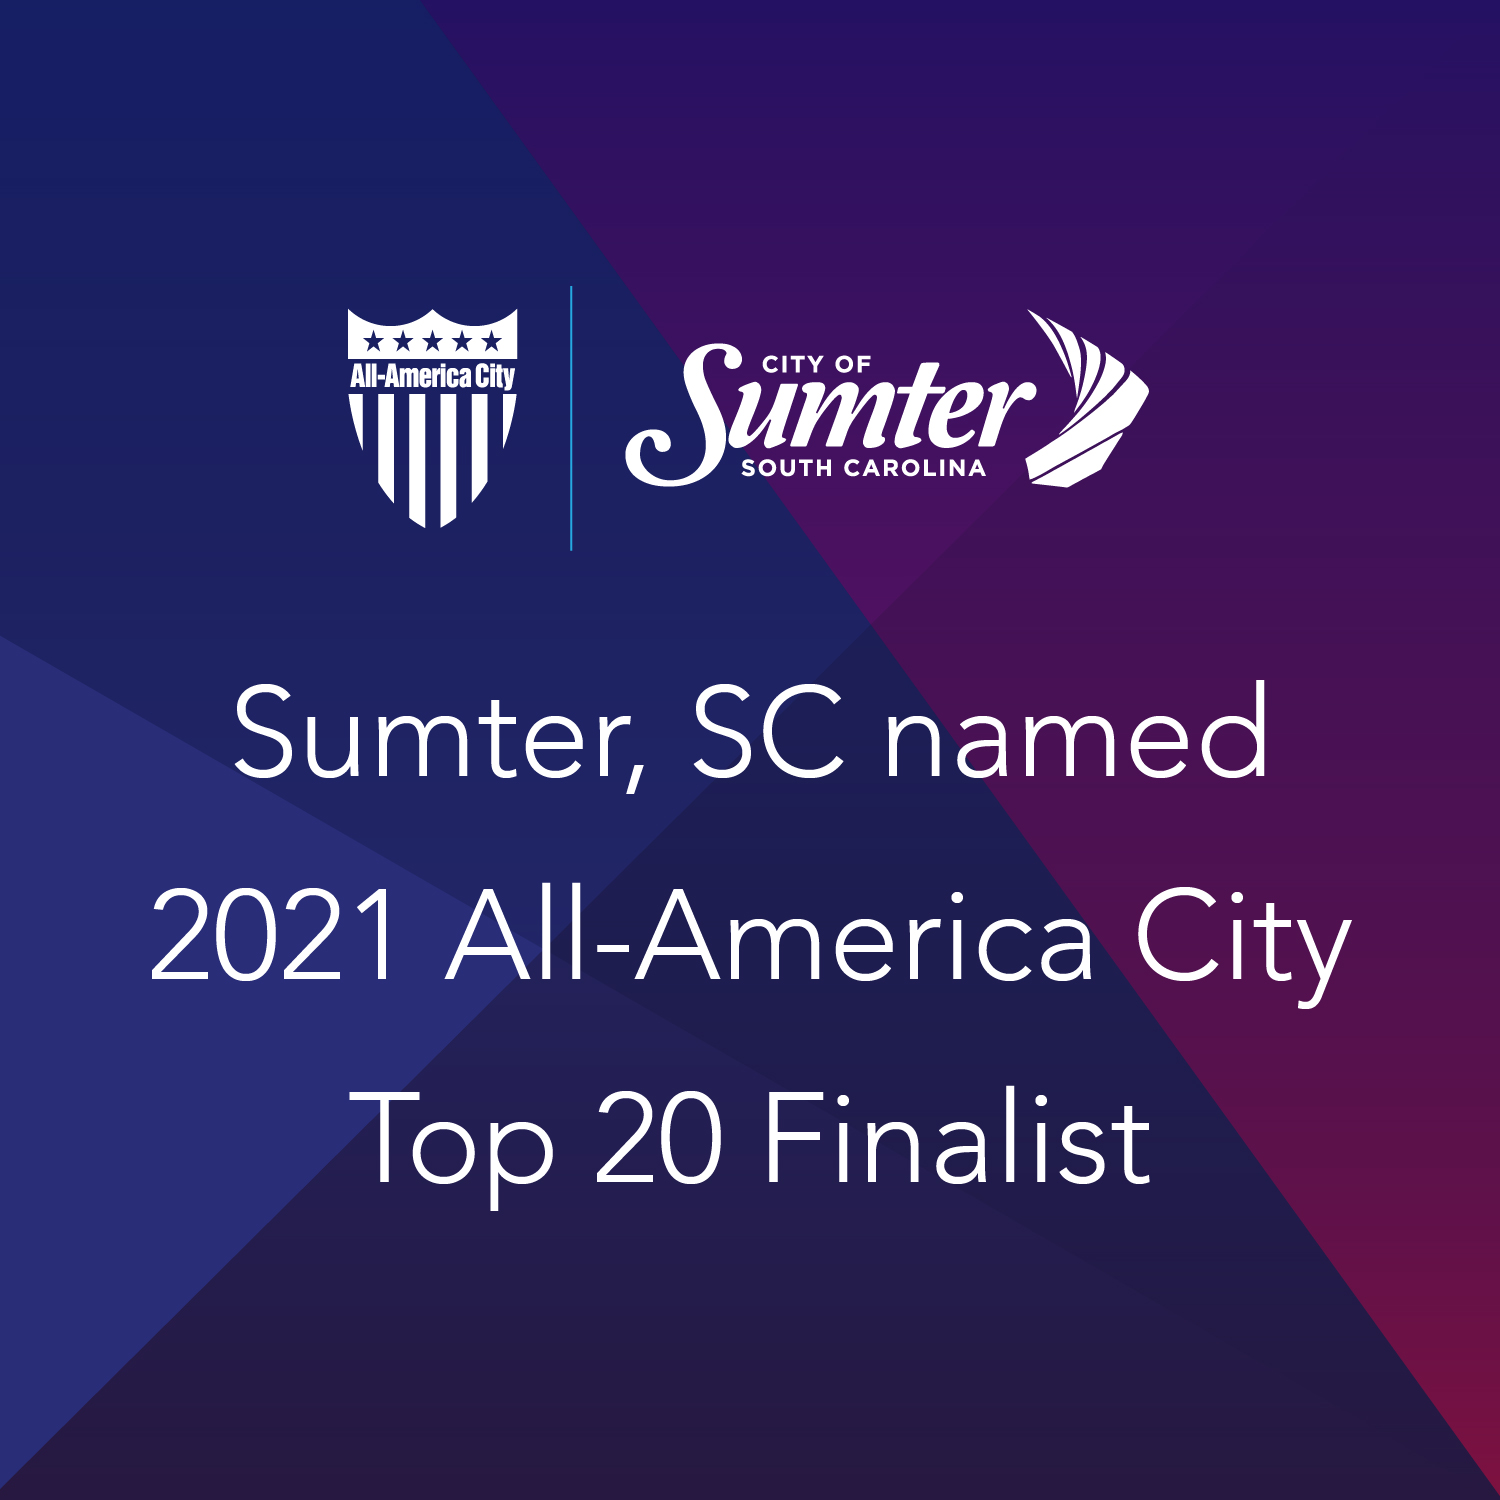 All-America City 2020 Finalist